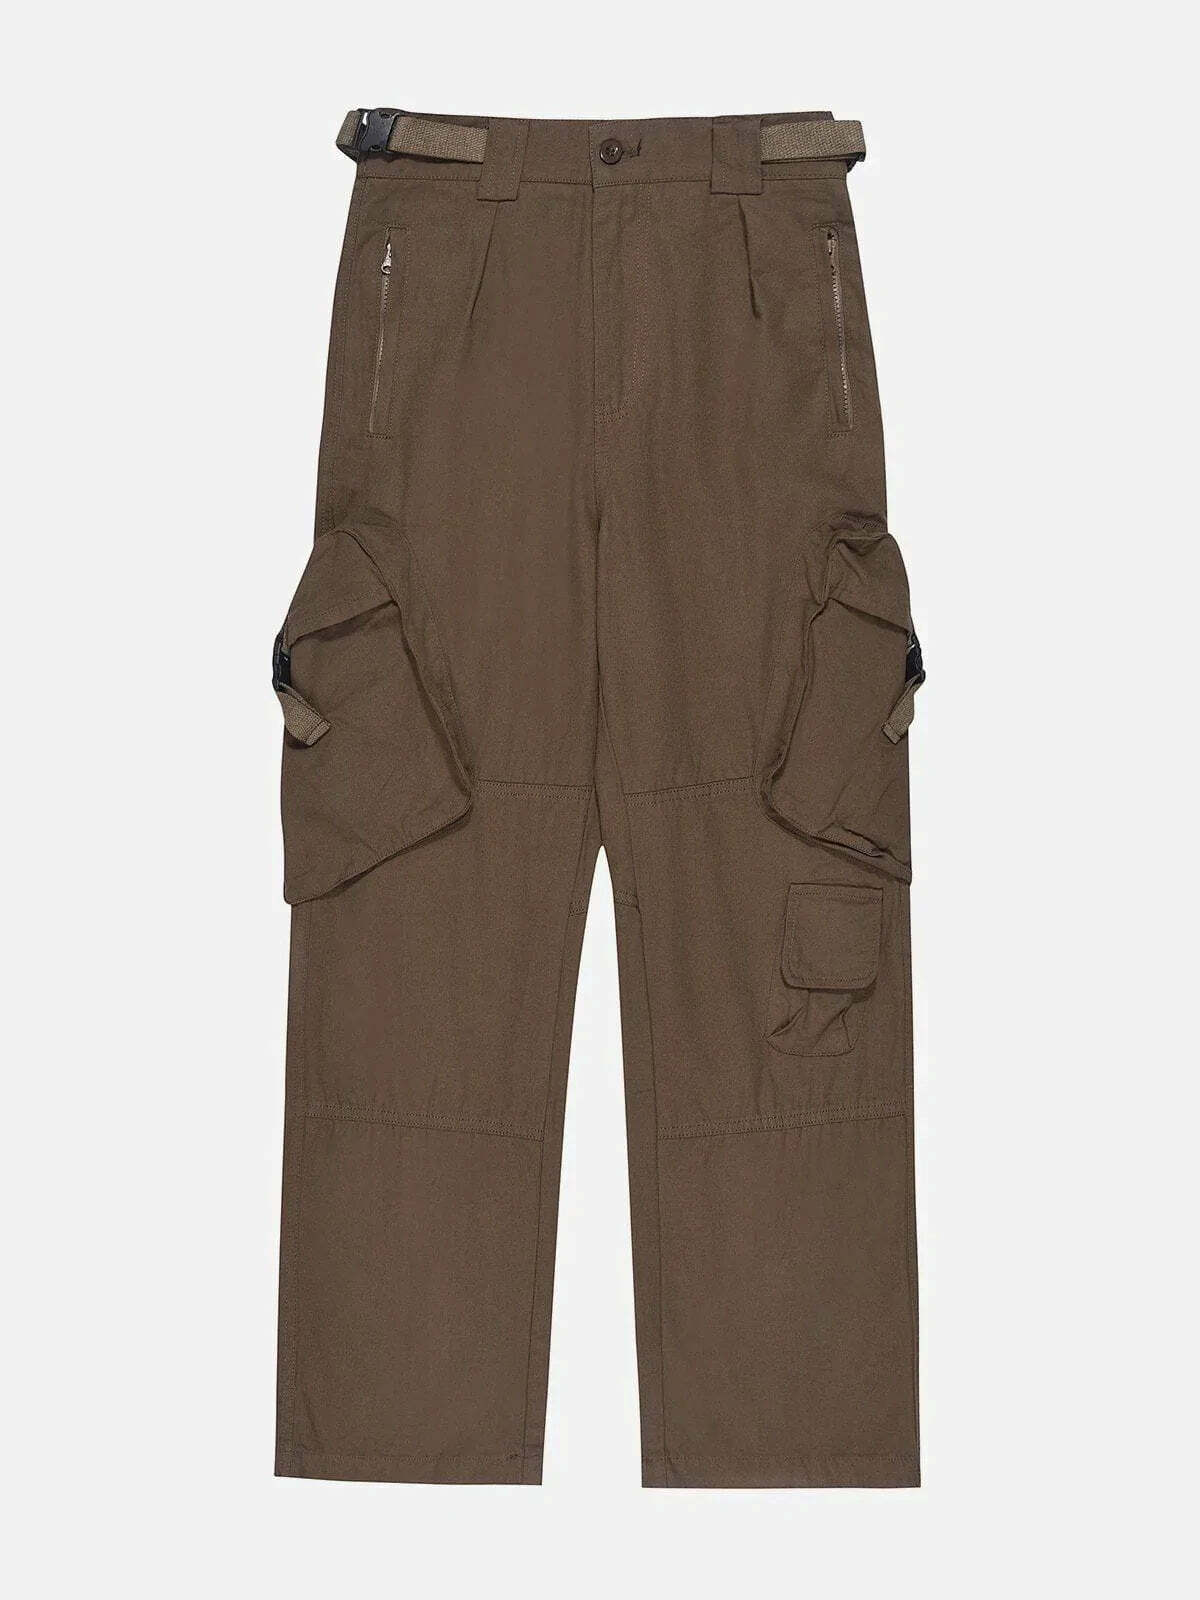 functional zipper pocket pants urban style 6229